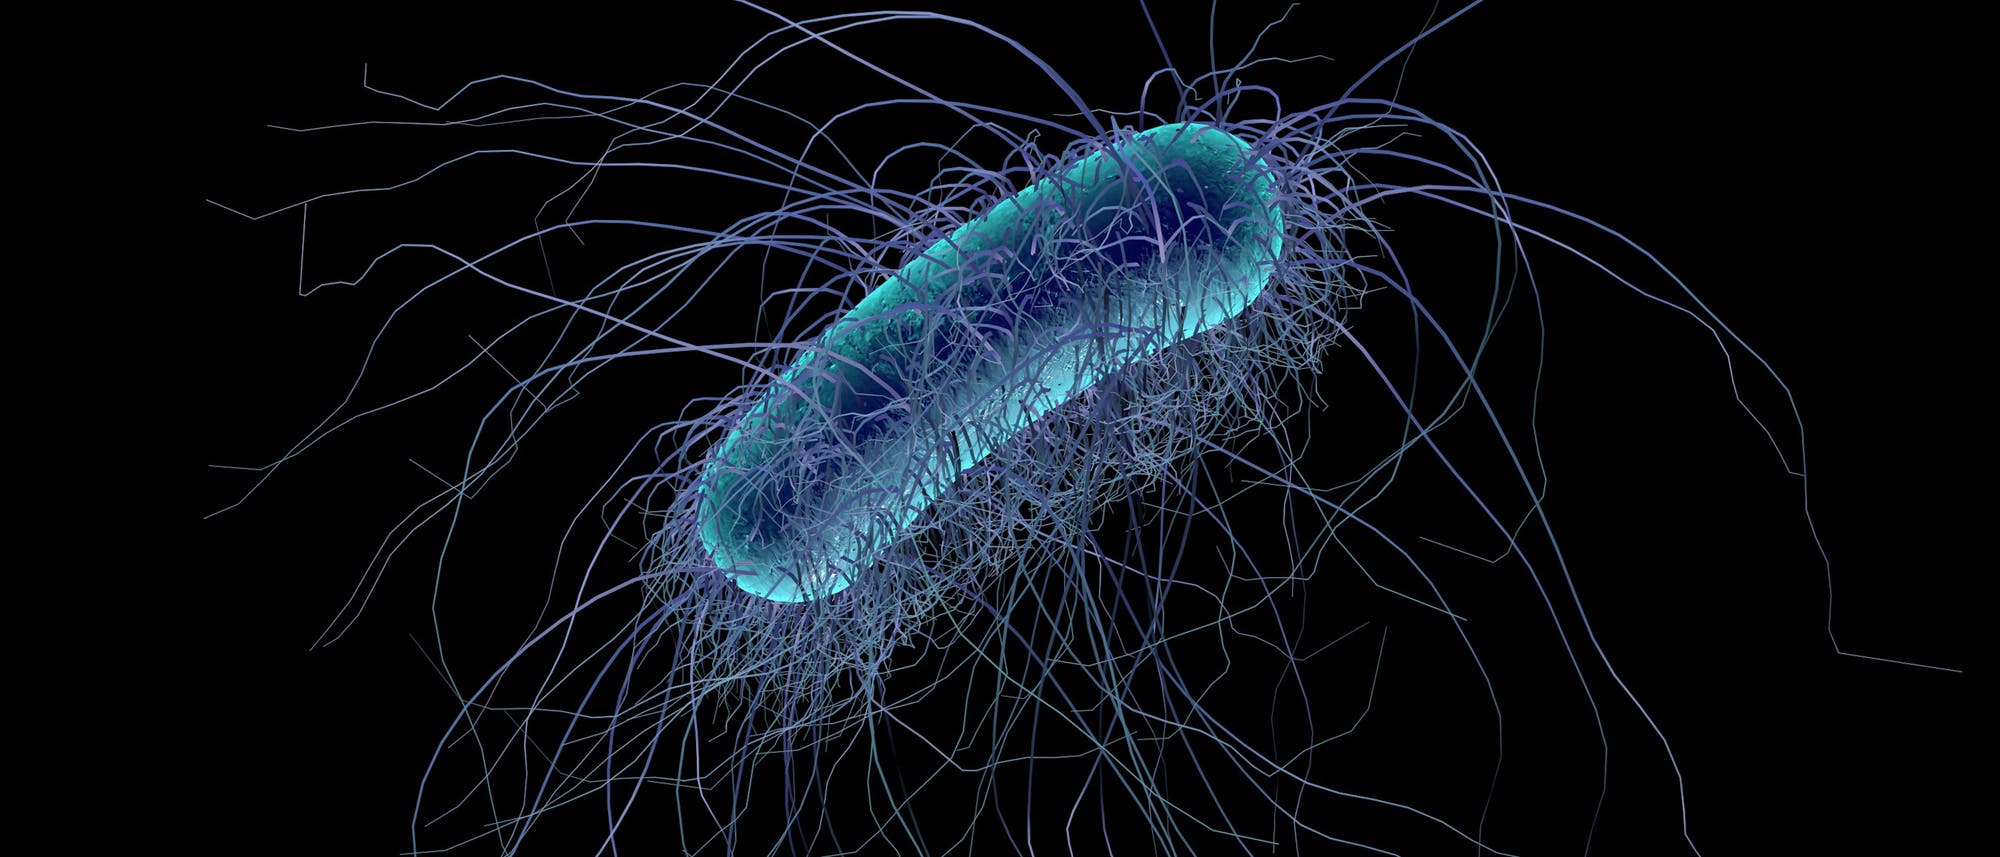 Darmbakterium Escherichia coli